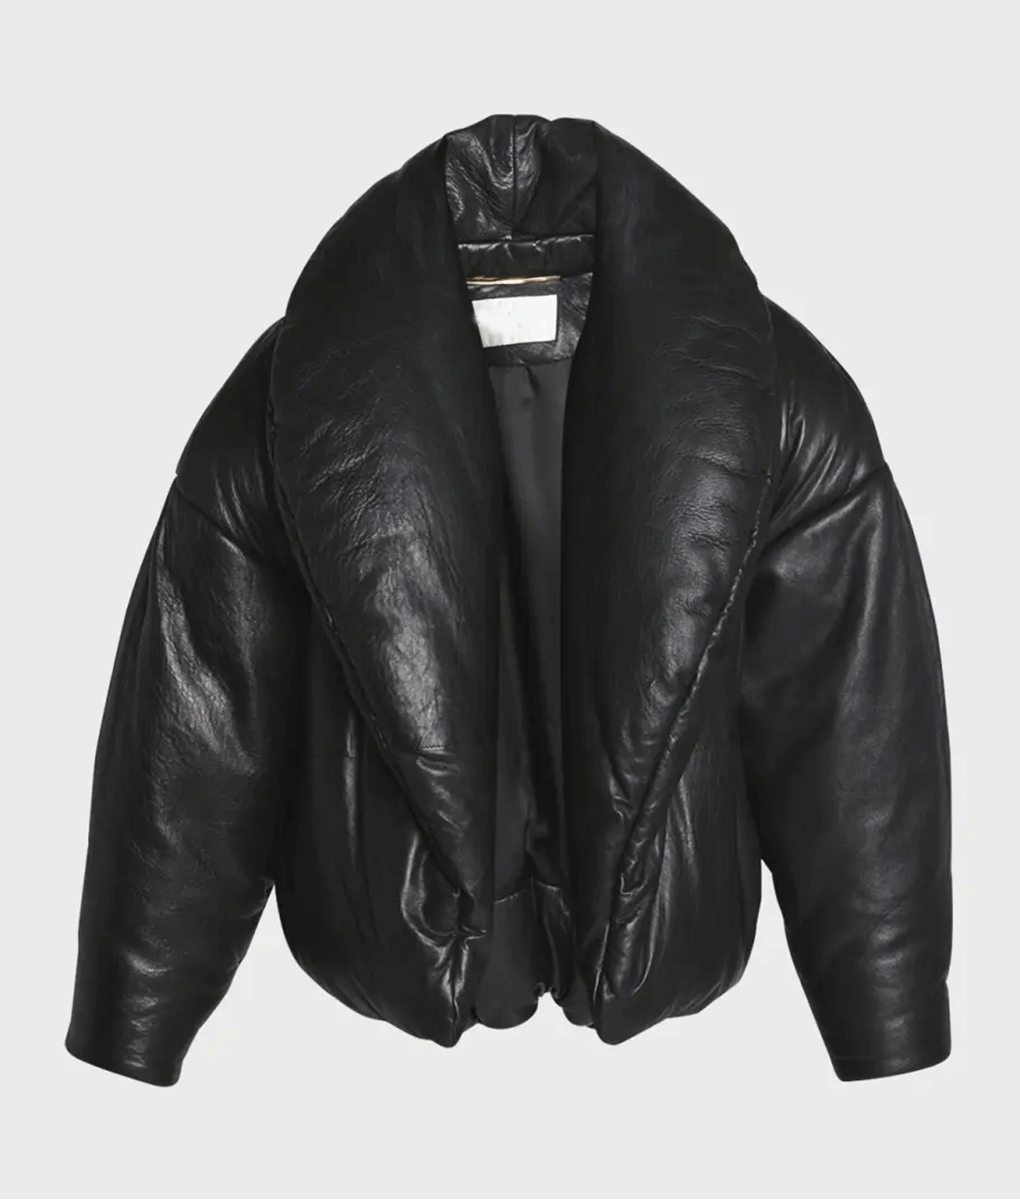 Mariah Carey Black Leather Jacket (4)